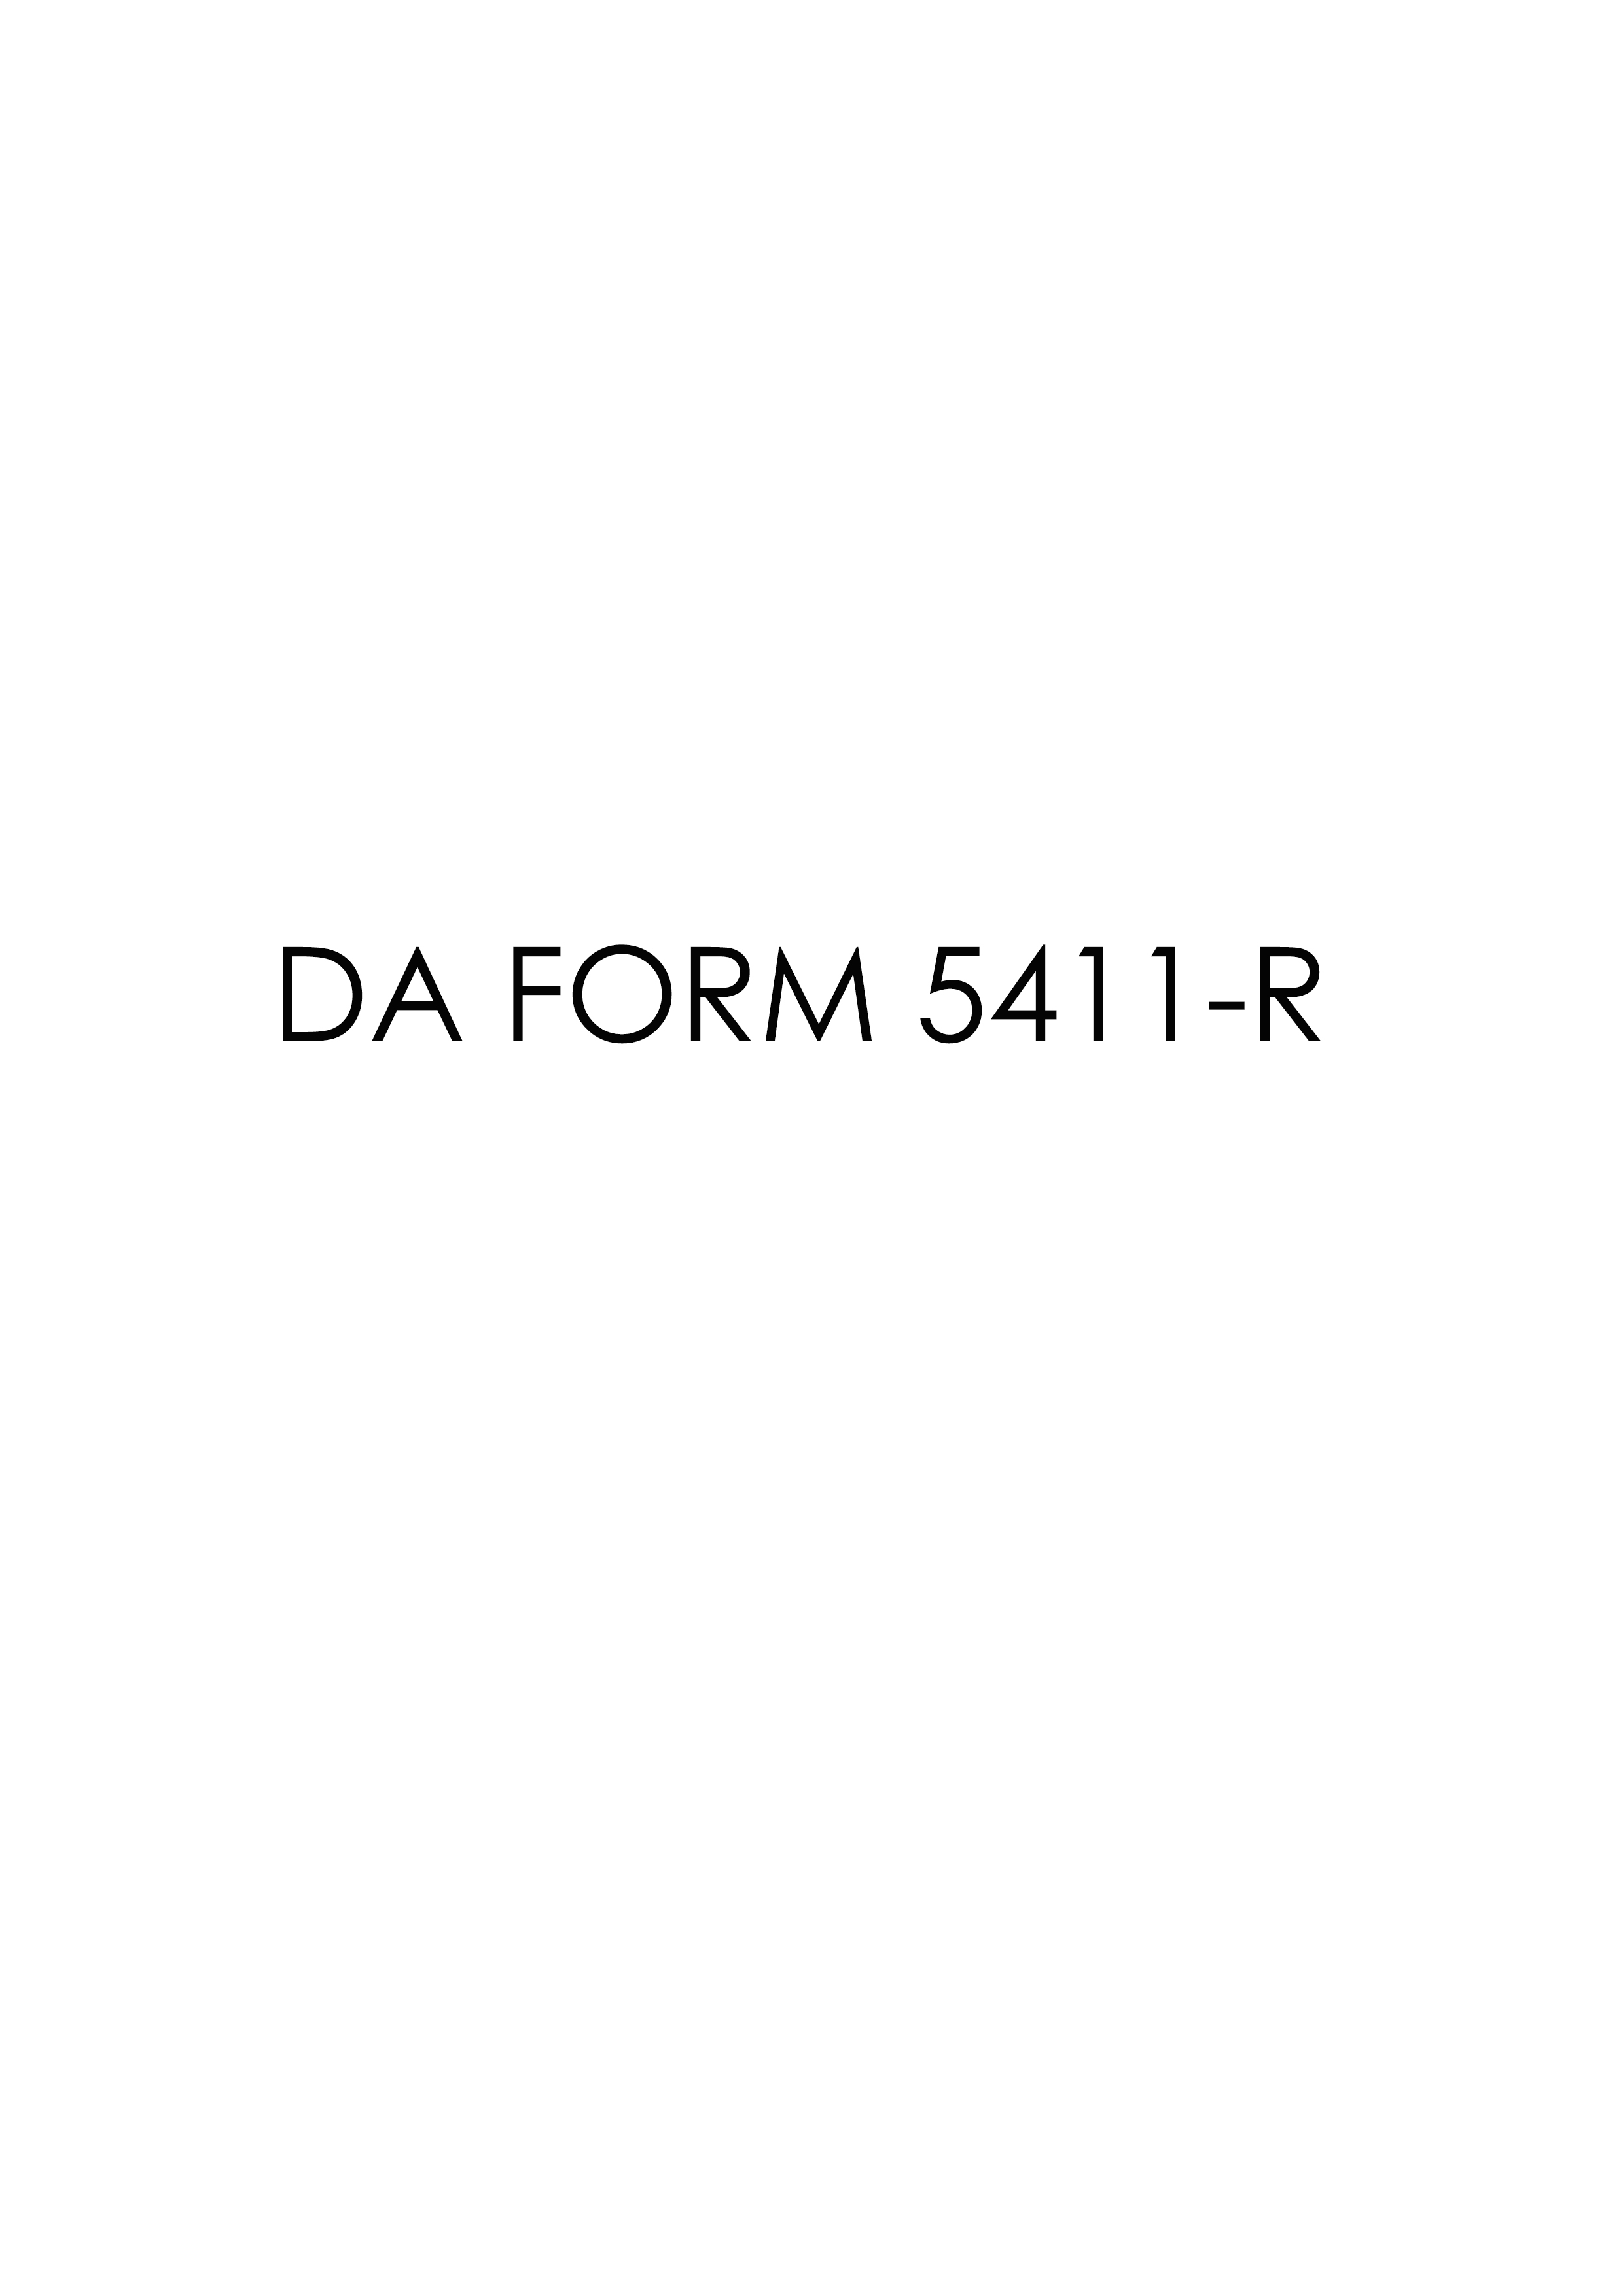 da Form 5411-R fillable